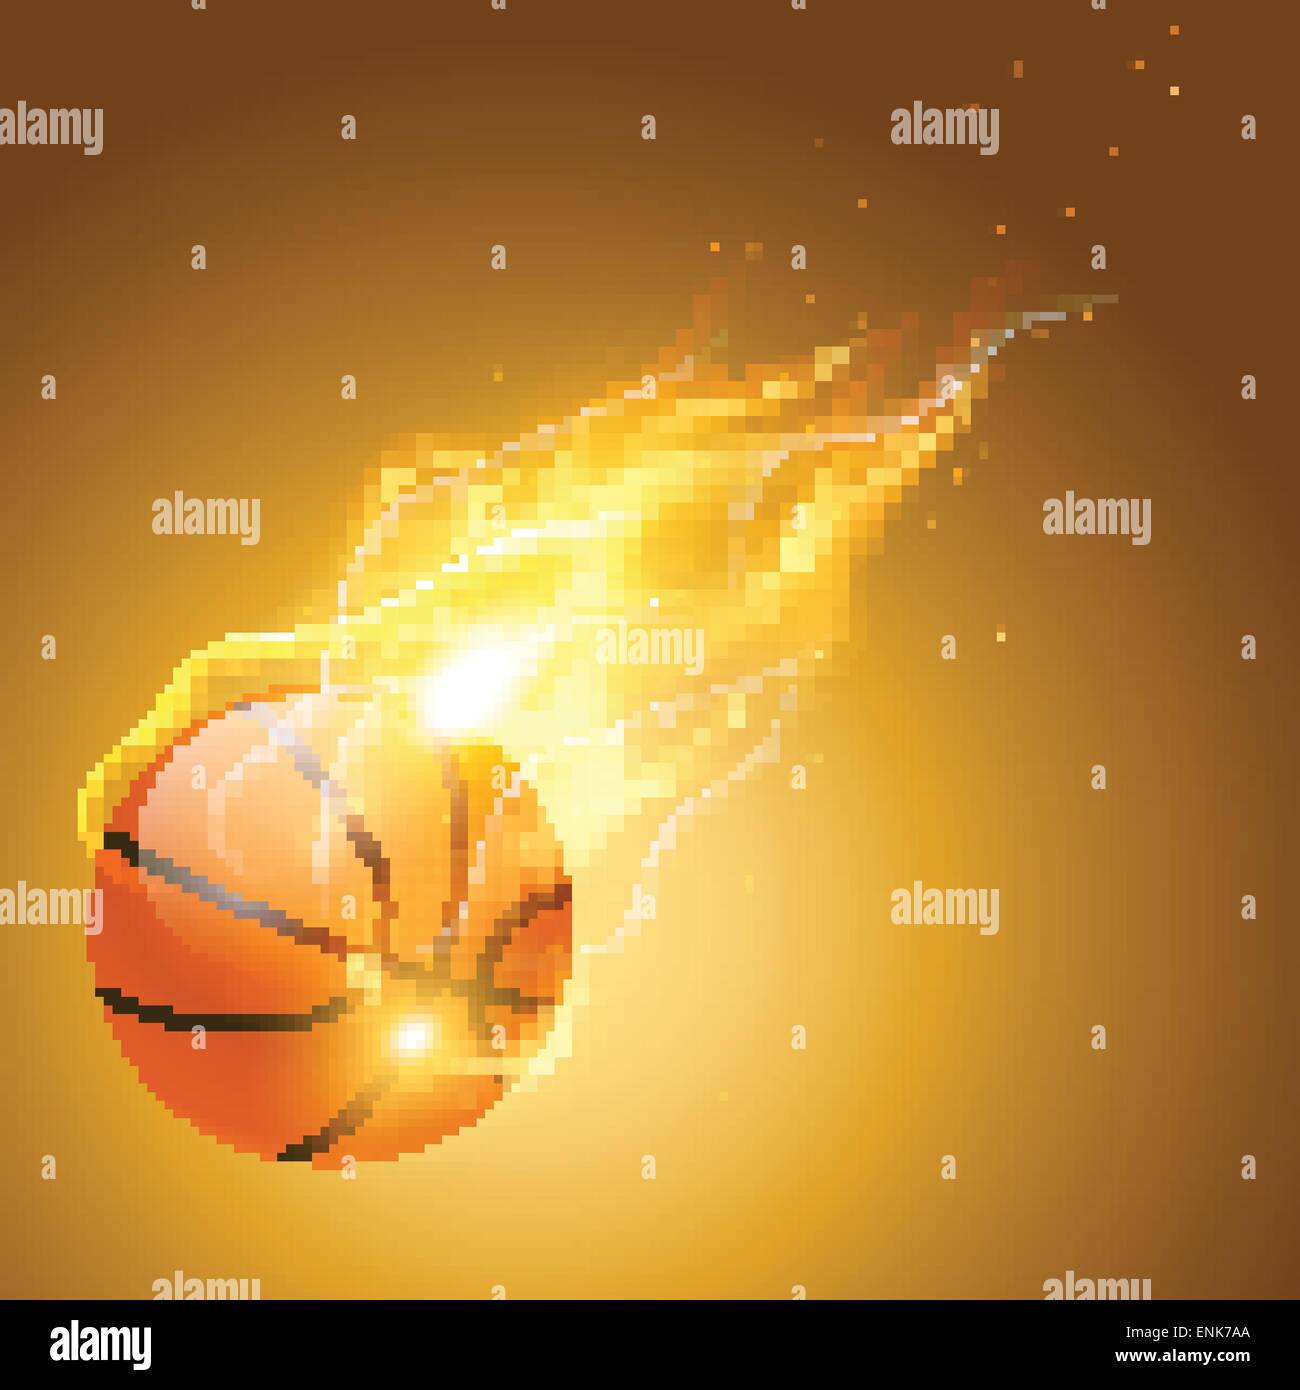 vector burning basketball background  illustration Stock Vector